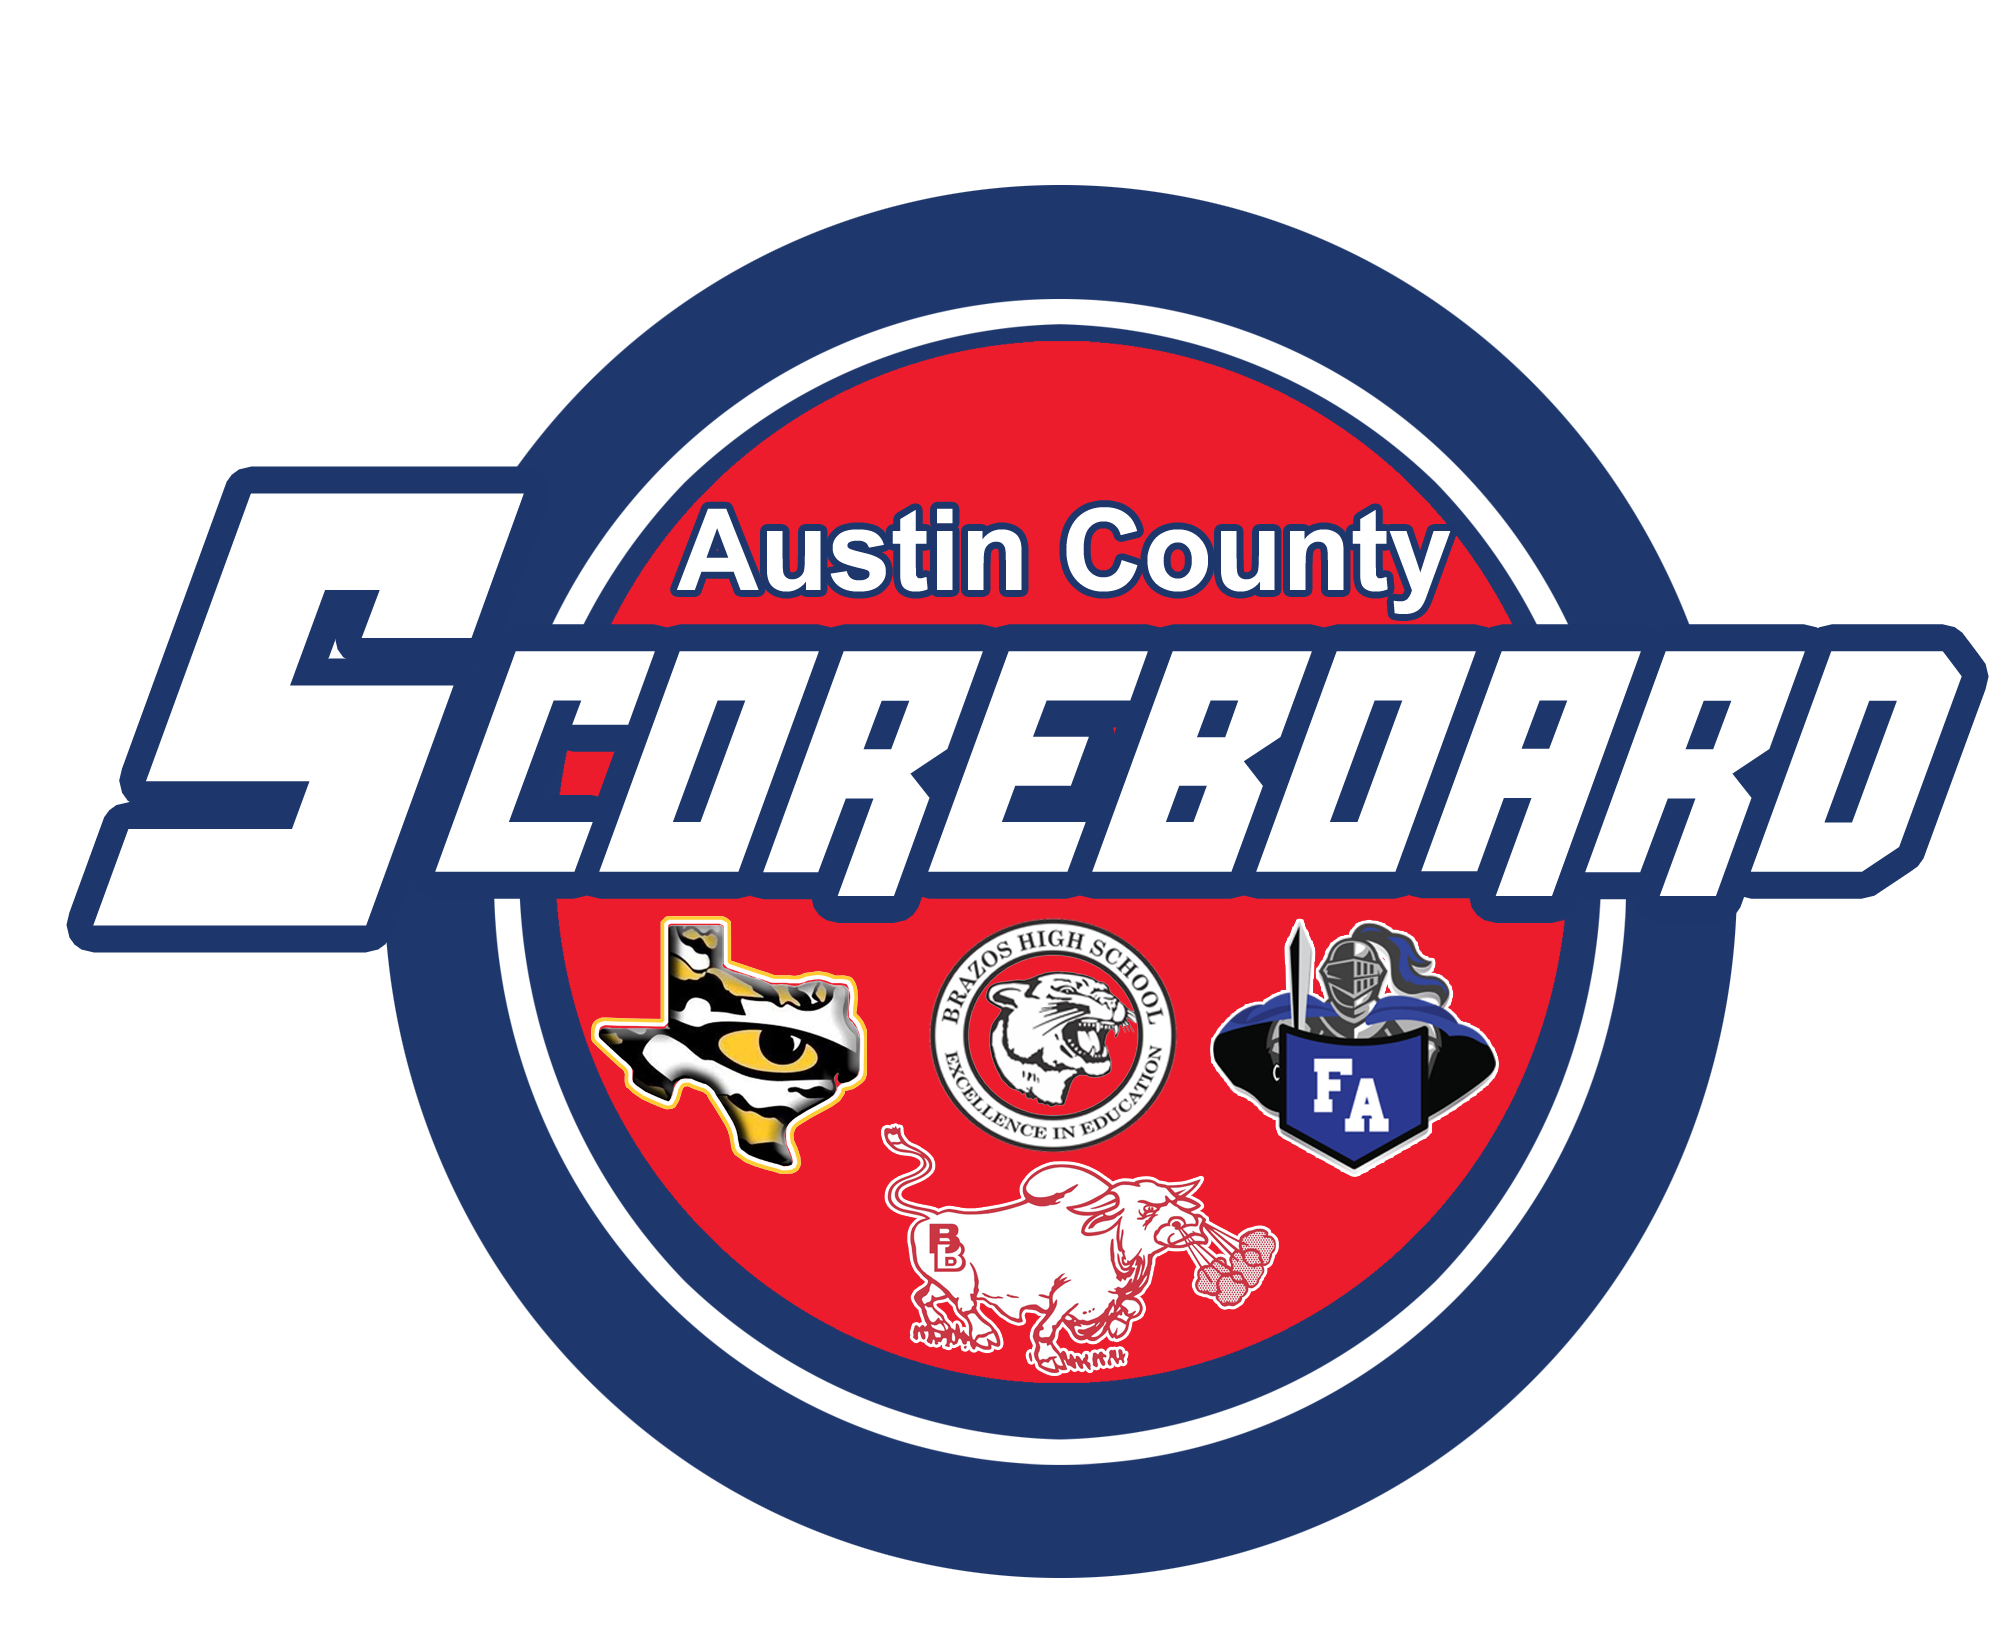 The Austin County Scoreboard